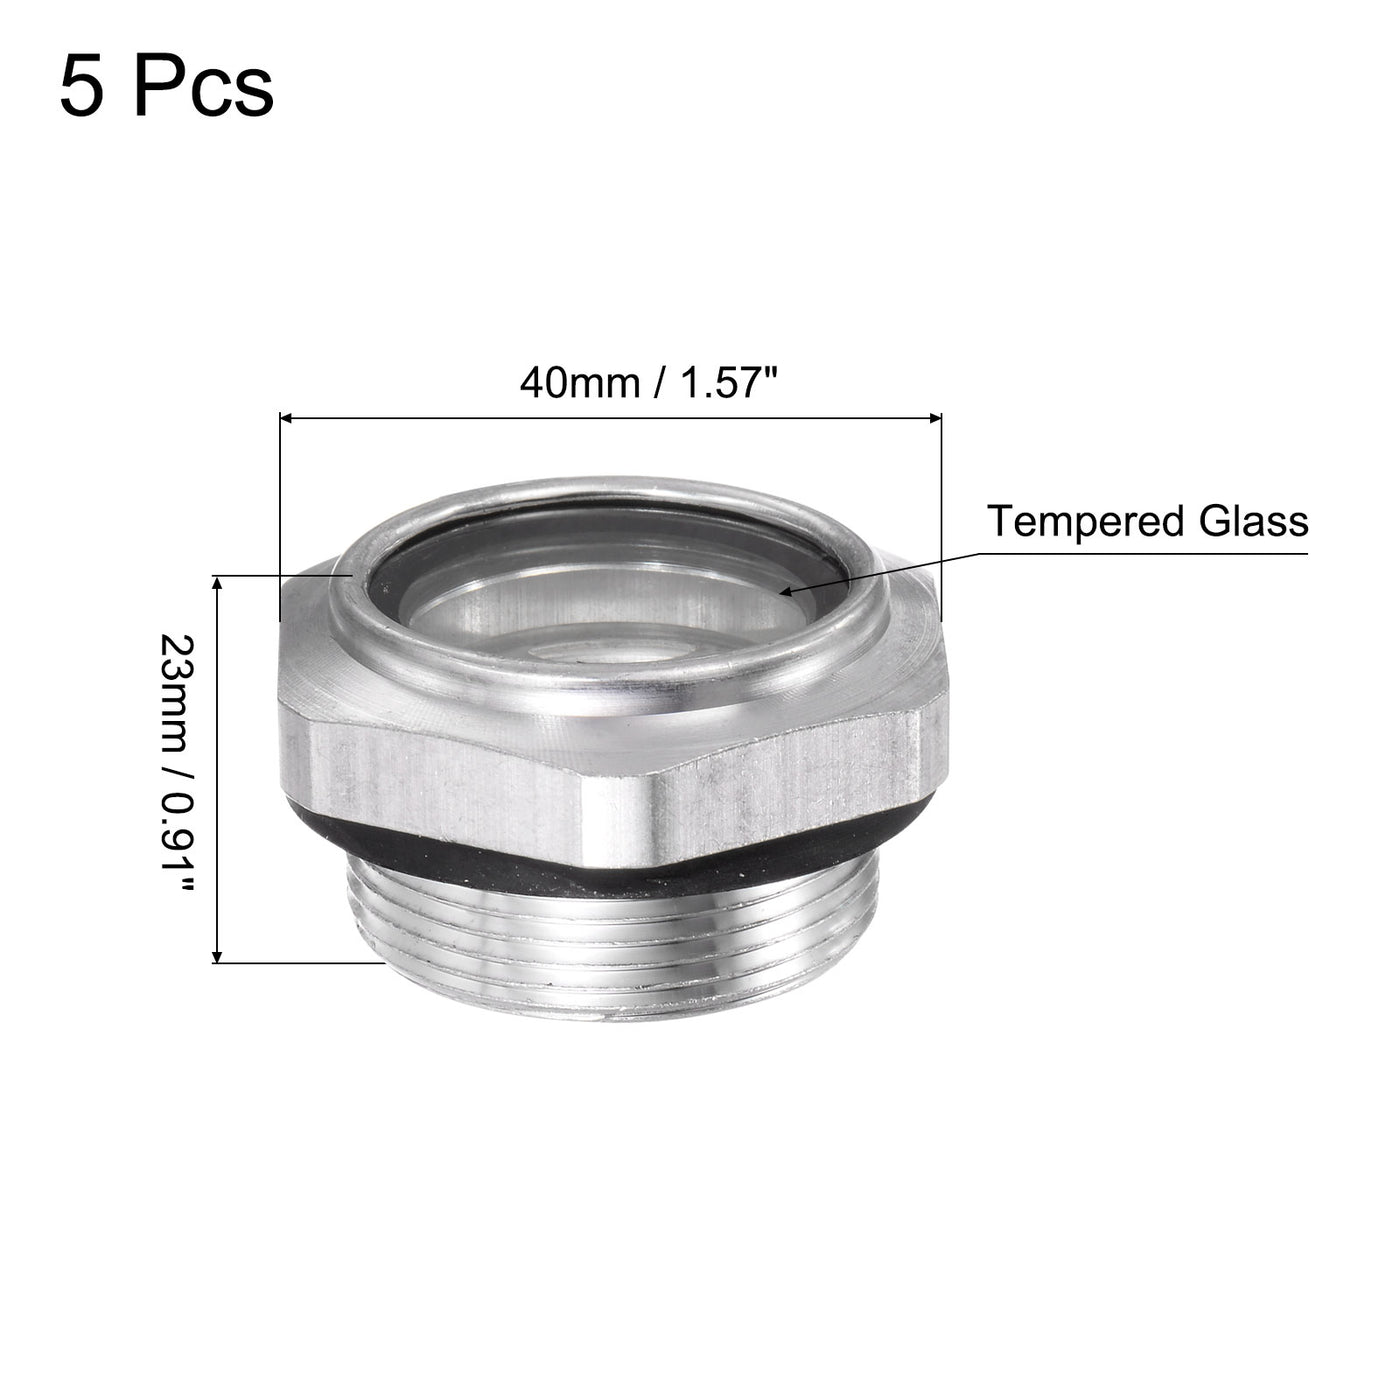 Uxcell Uxcell Air Compressor Oil Level Gauge Sight Glass M33x1.5mm Male Thread Aluminum 5Pcs